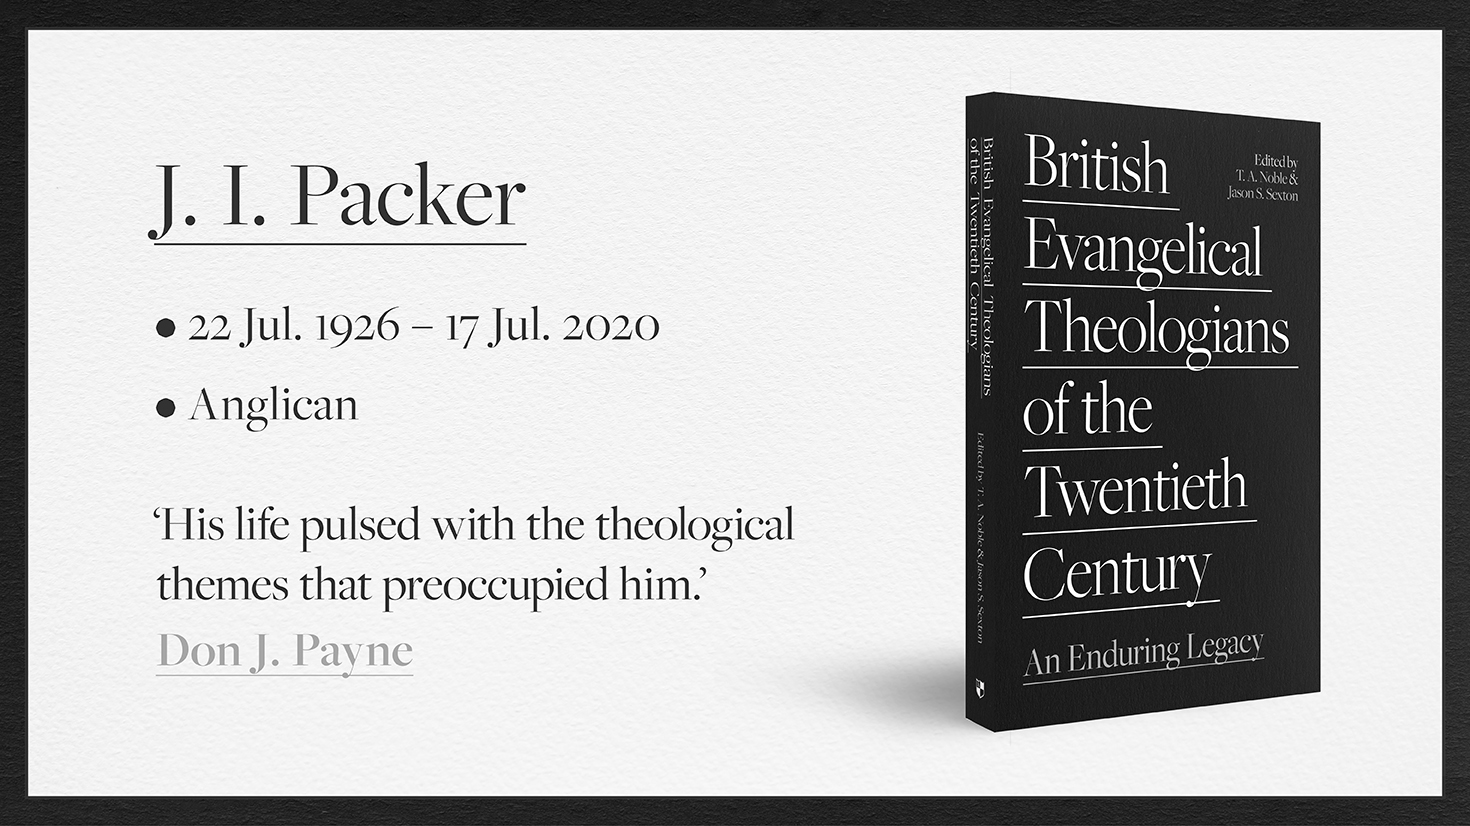 J. I. Packer: British Evangelical Theologian of the Twentieth Century